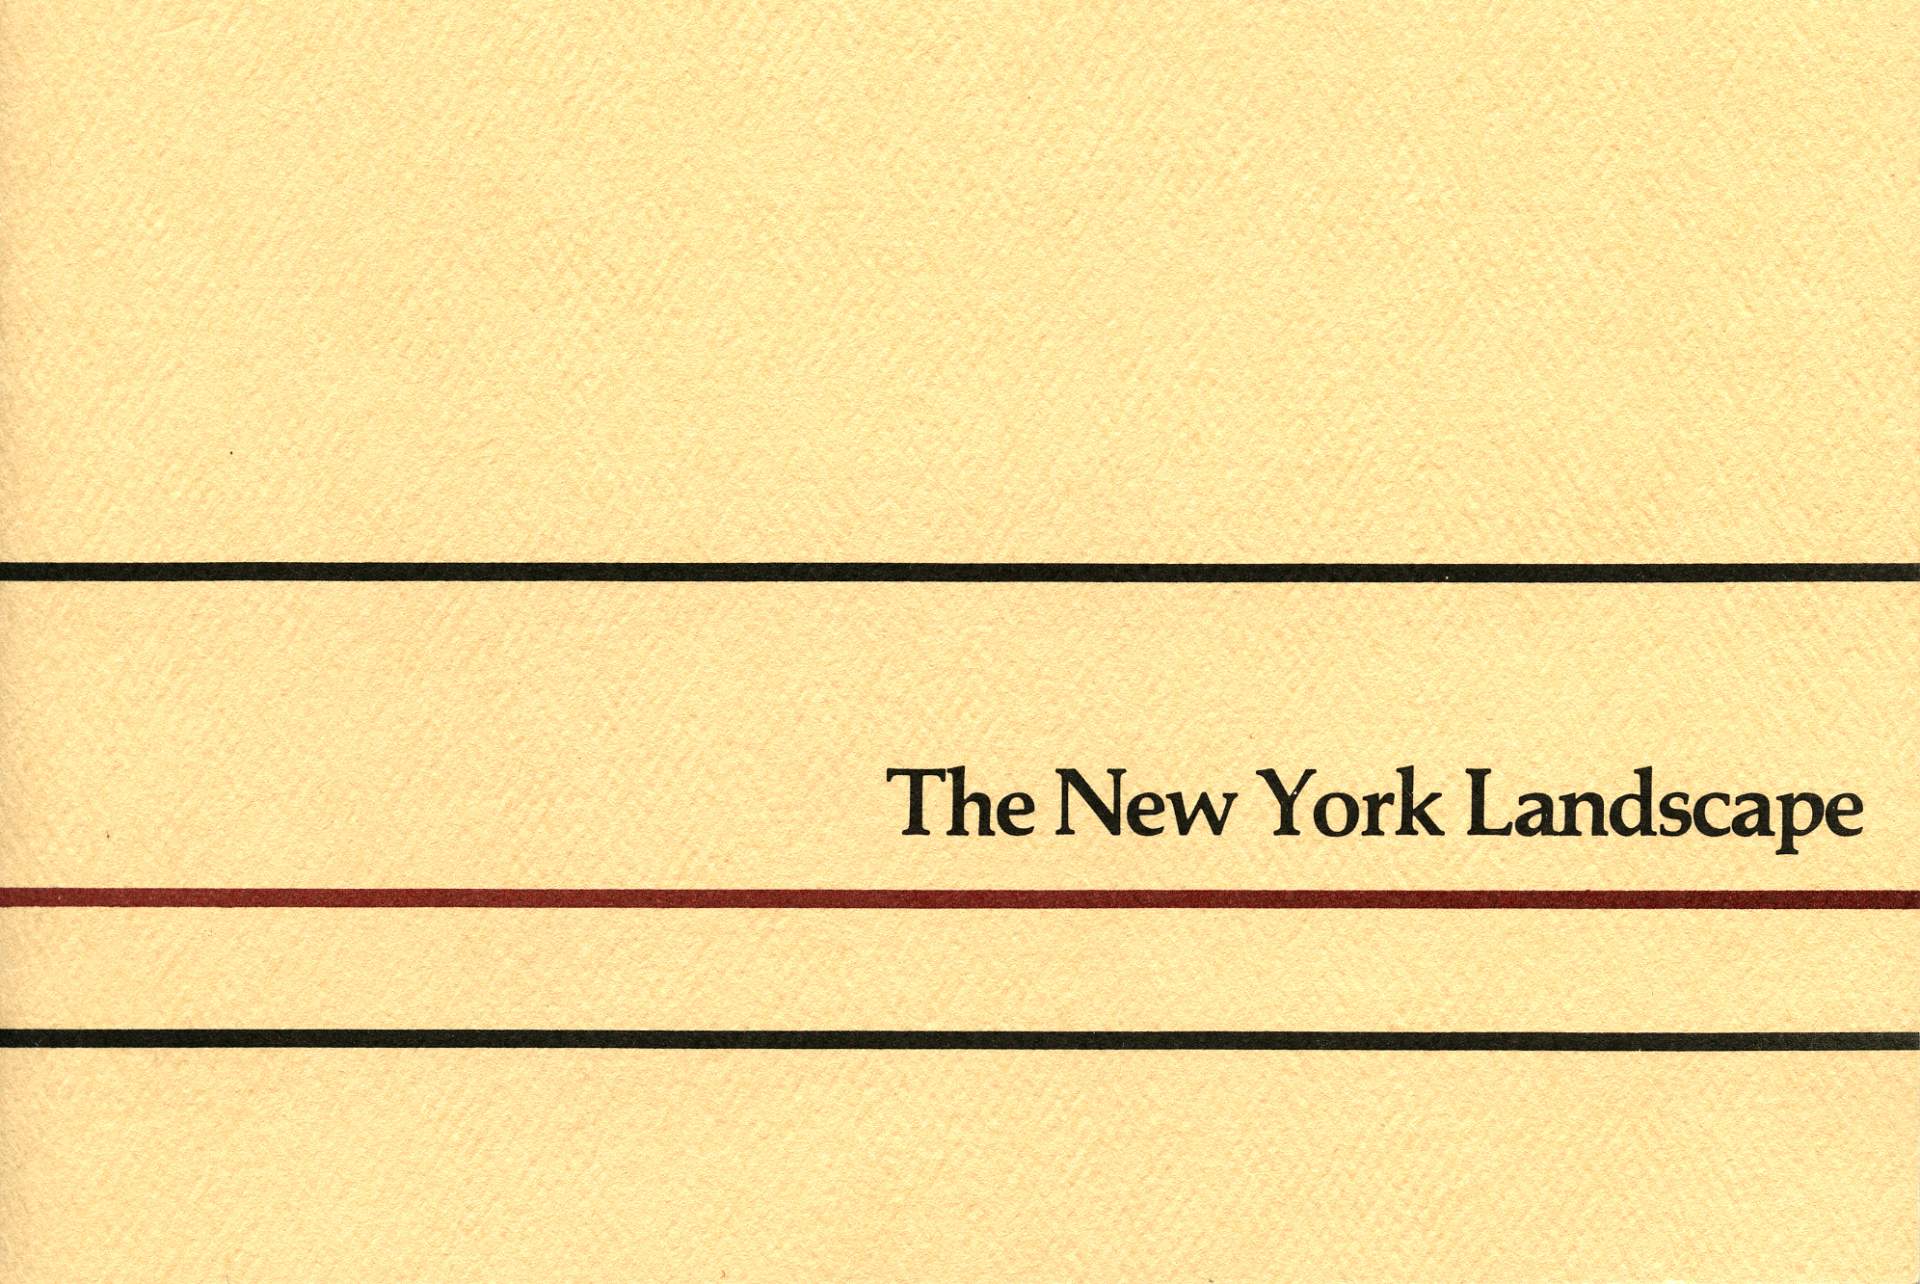 The New York Landscape